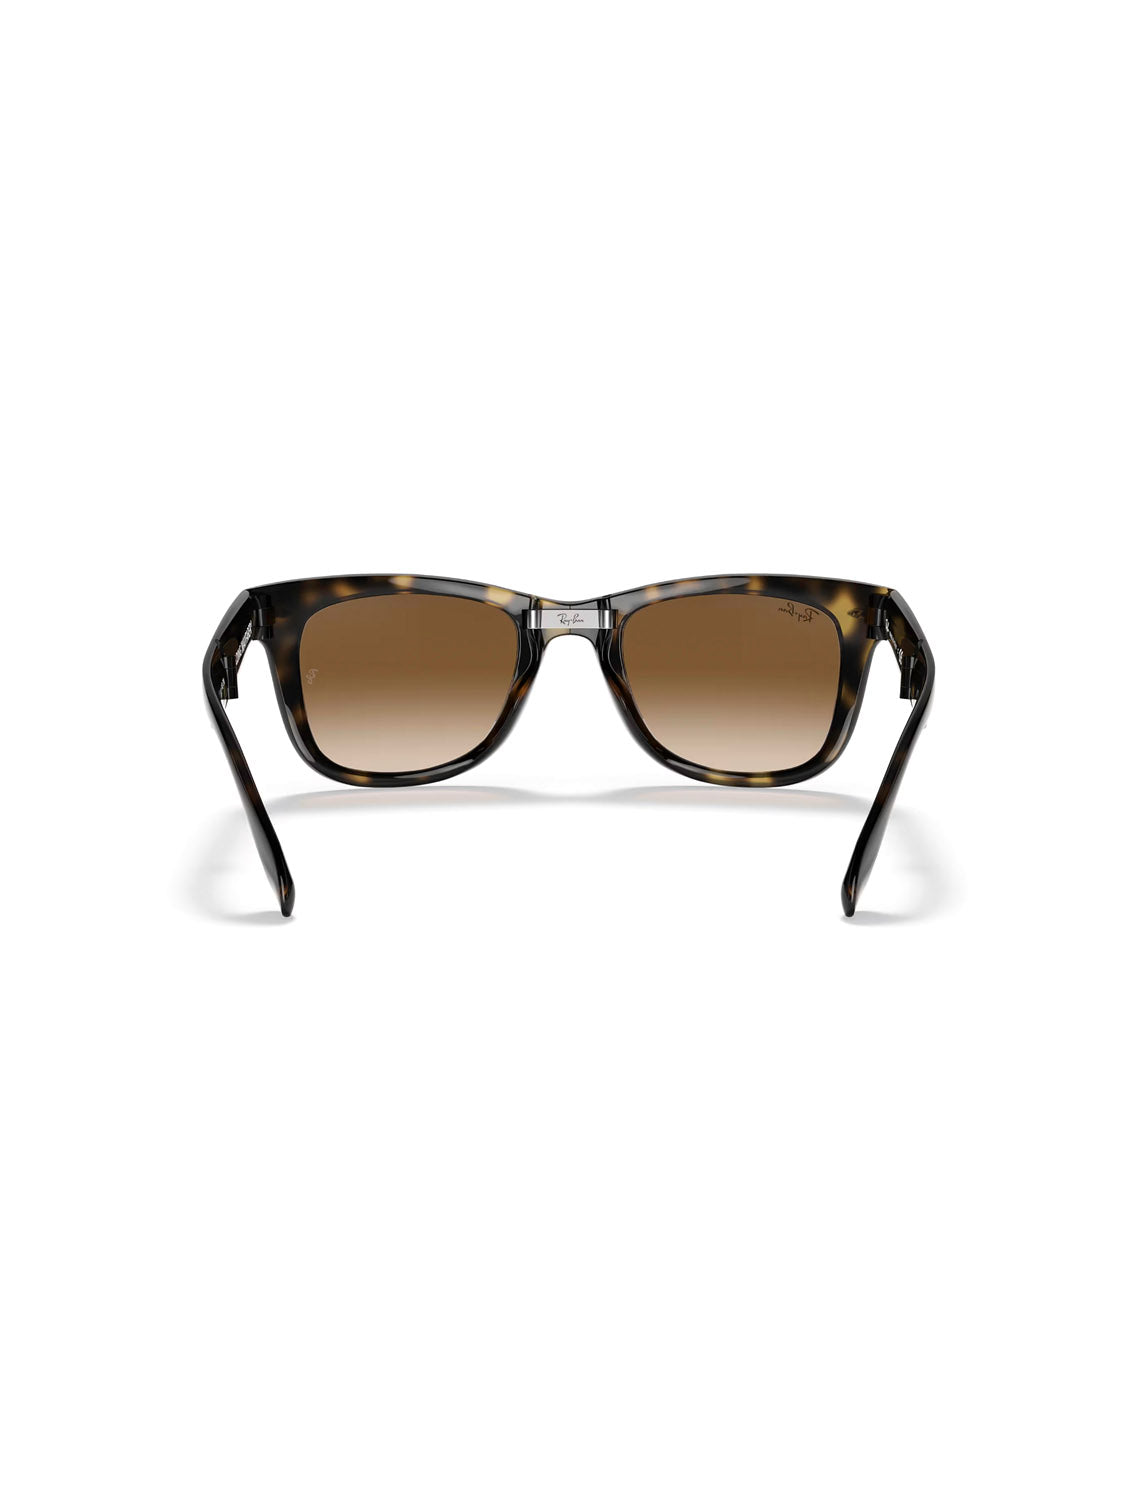 Ray Ban RB4105 Wayfarer Folding Classic Sunglasses